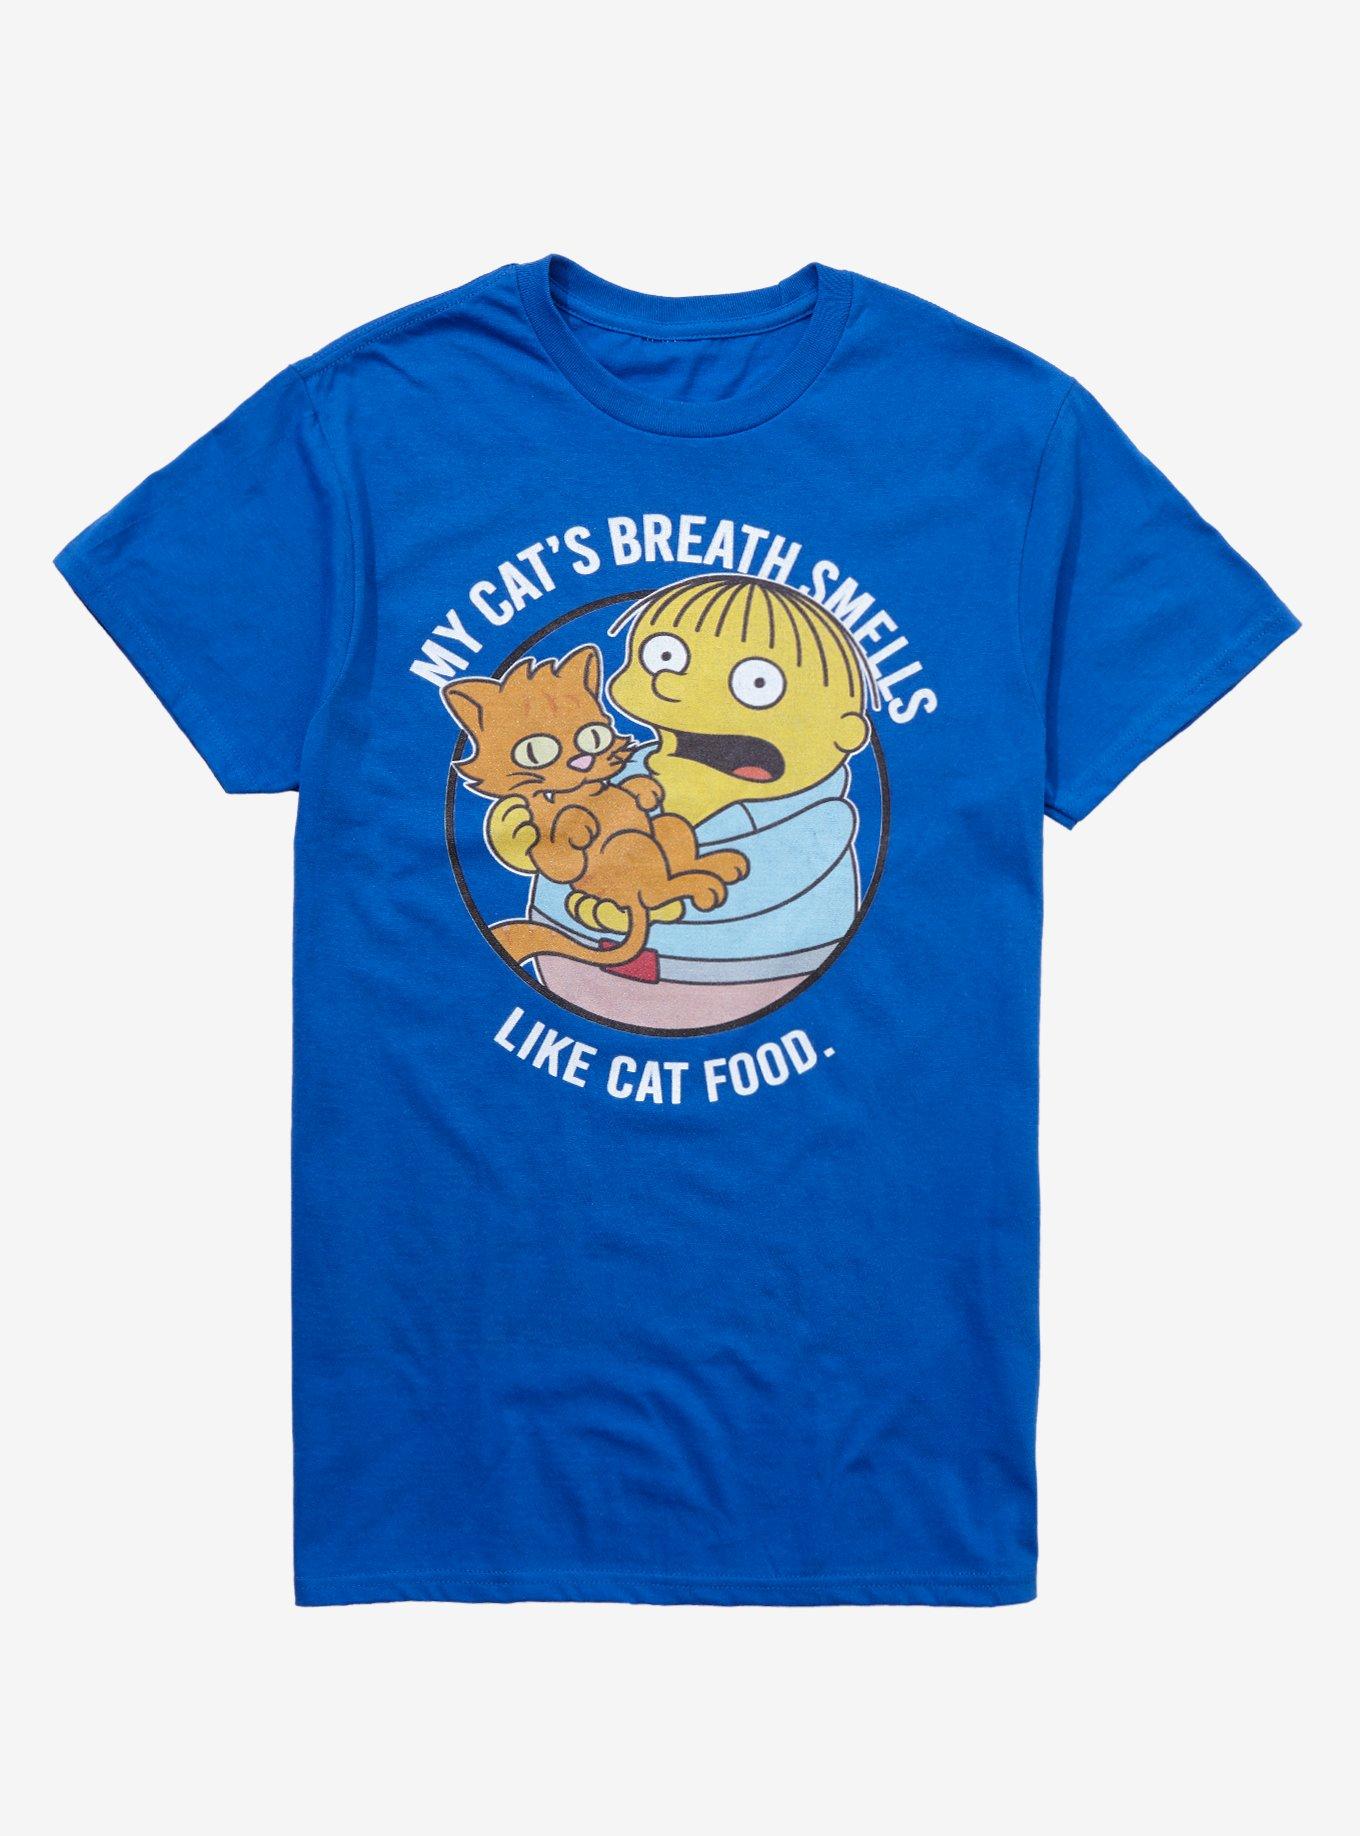 My Cat's Breathe Smells Like Cat Food Kids T-Shirt 